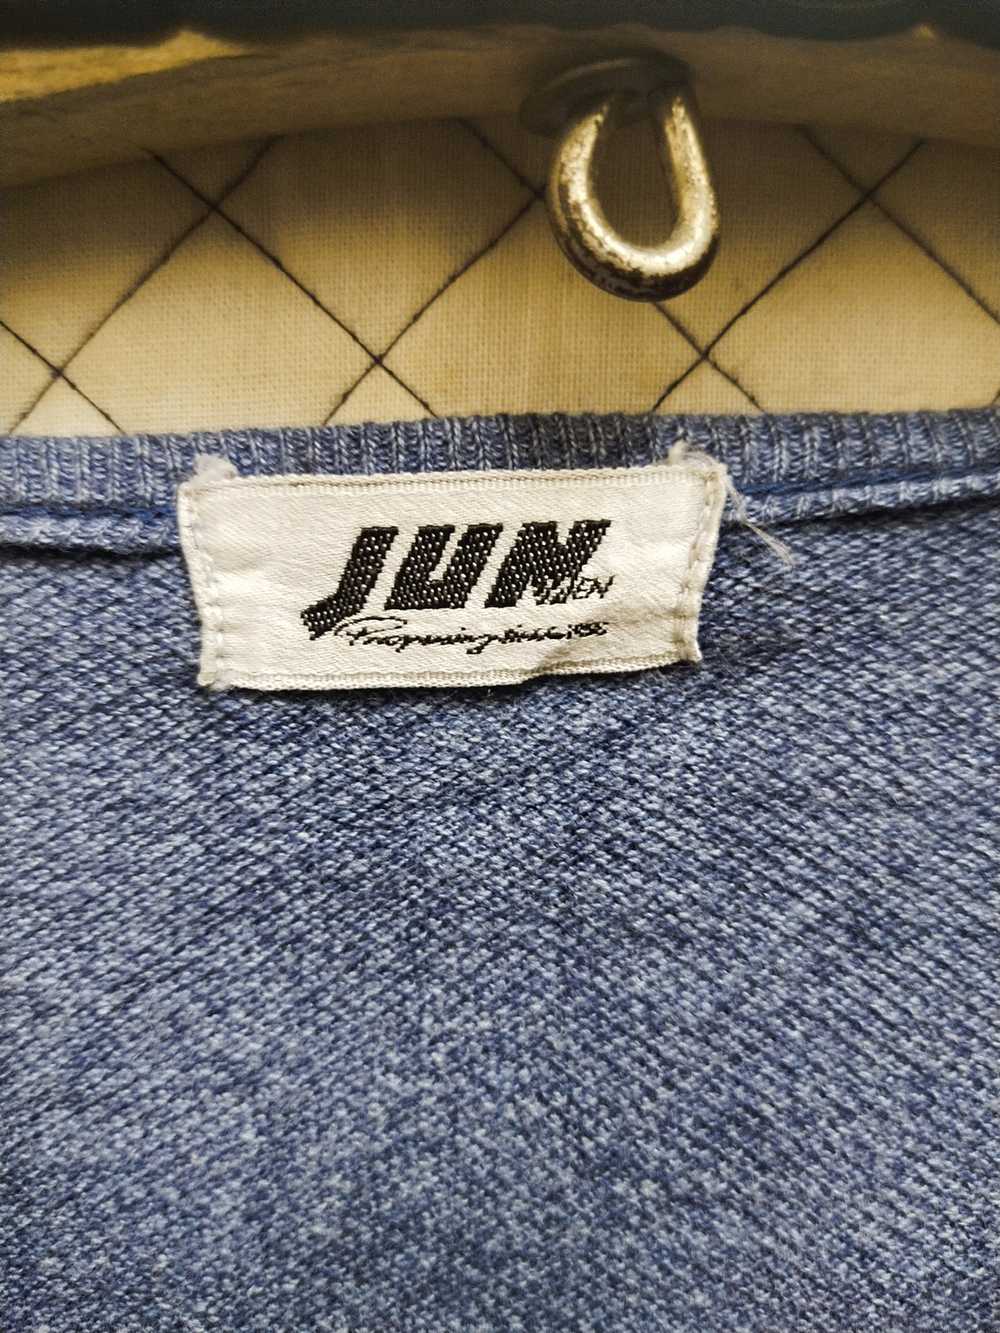 Japanese Brand JUN MEN X JAPANESE BRAND X VINTAGE - image 5